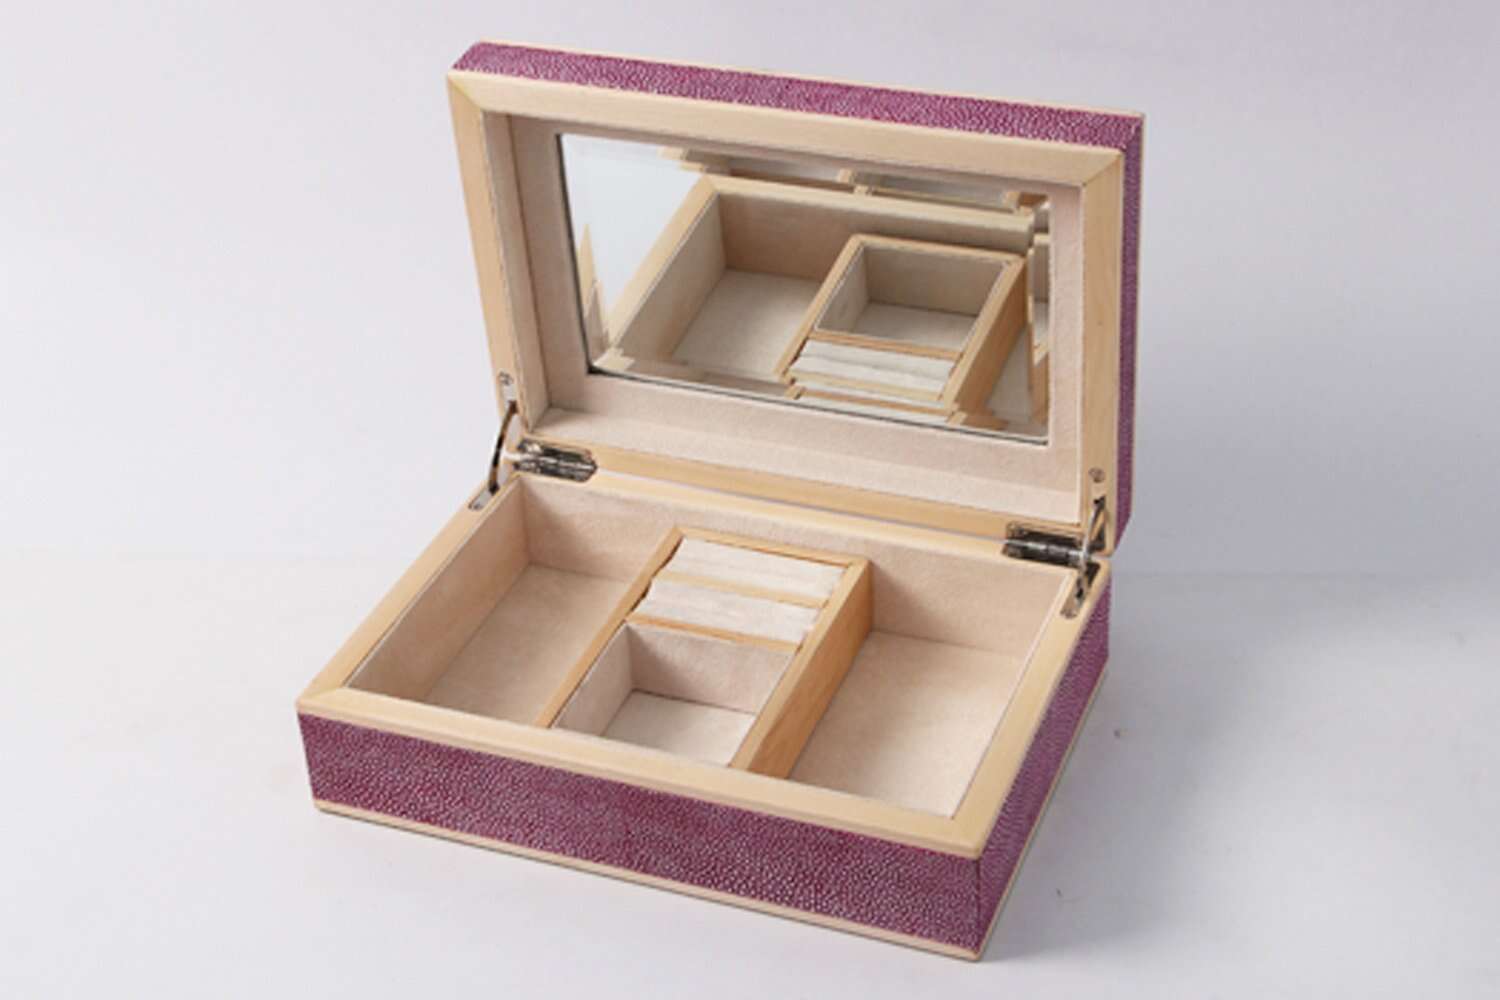 Luxury Birthday gift present shagreen jewelry box in pink